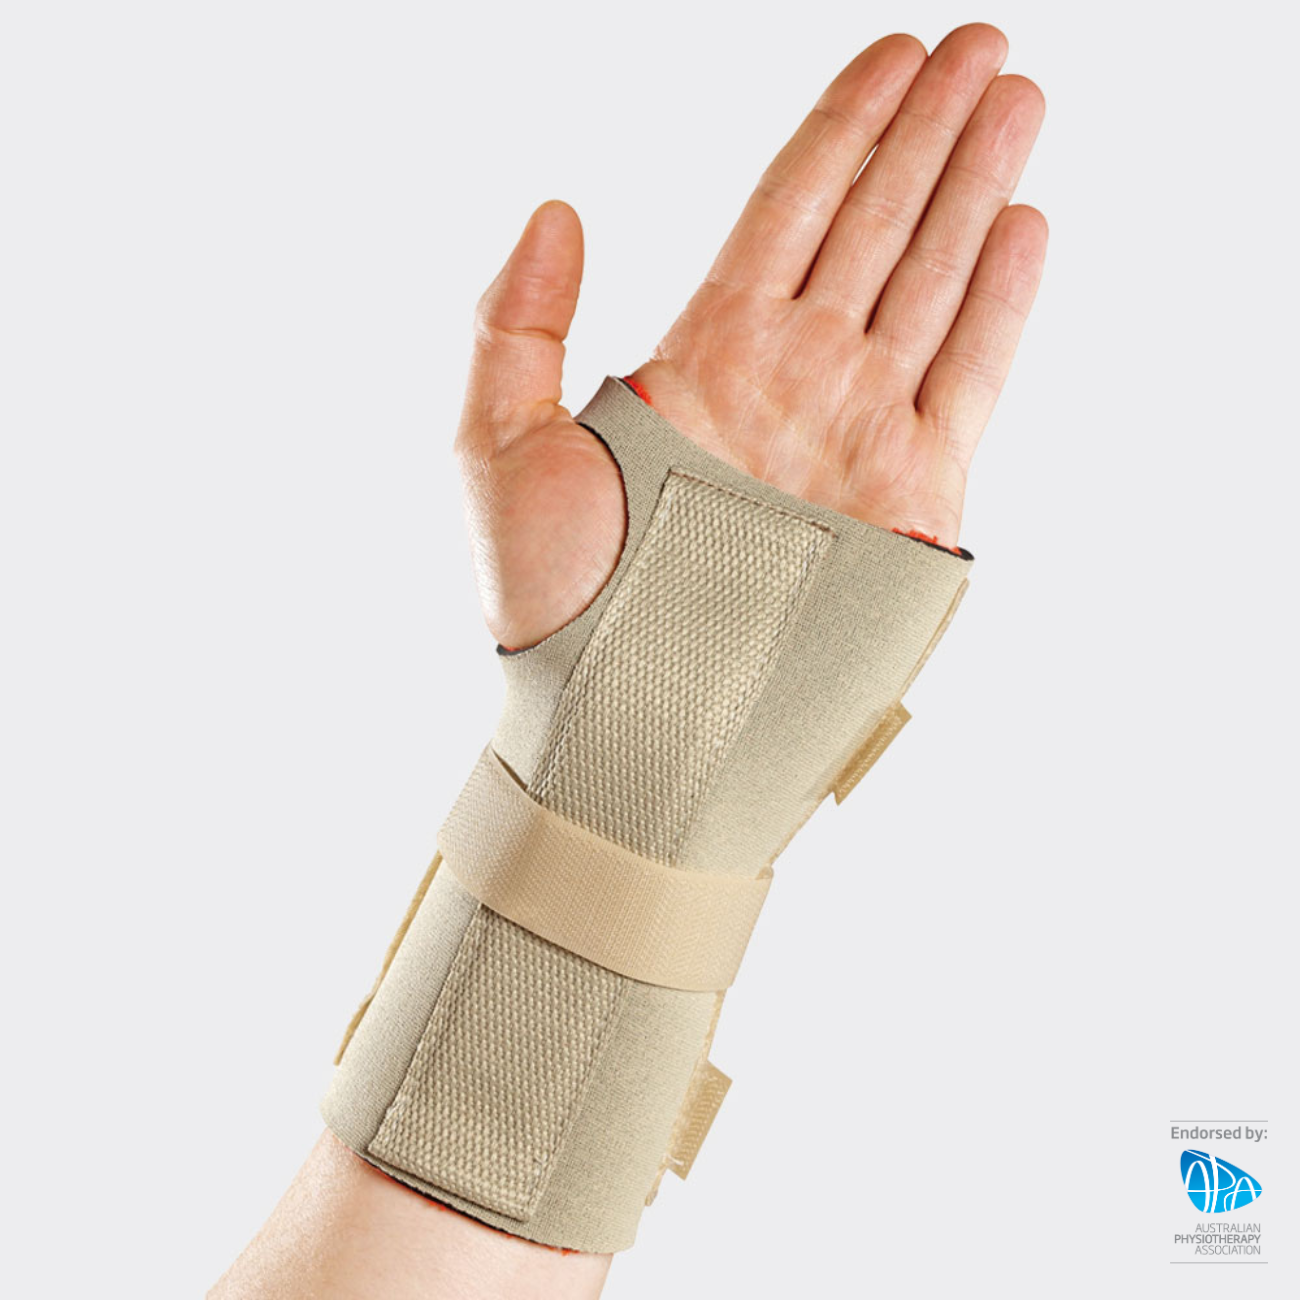 Should You Use a Wrist Splint for Carpal Tunnel?